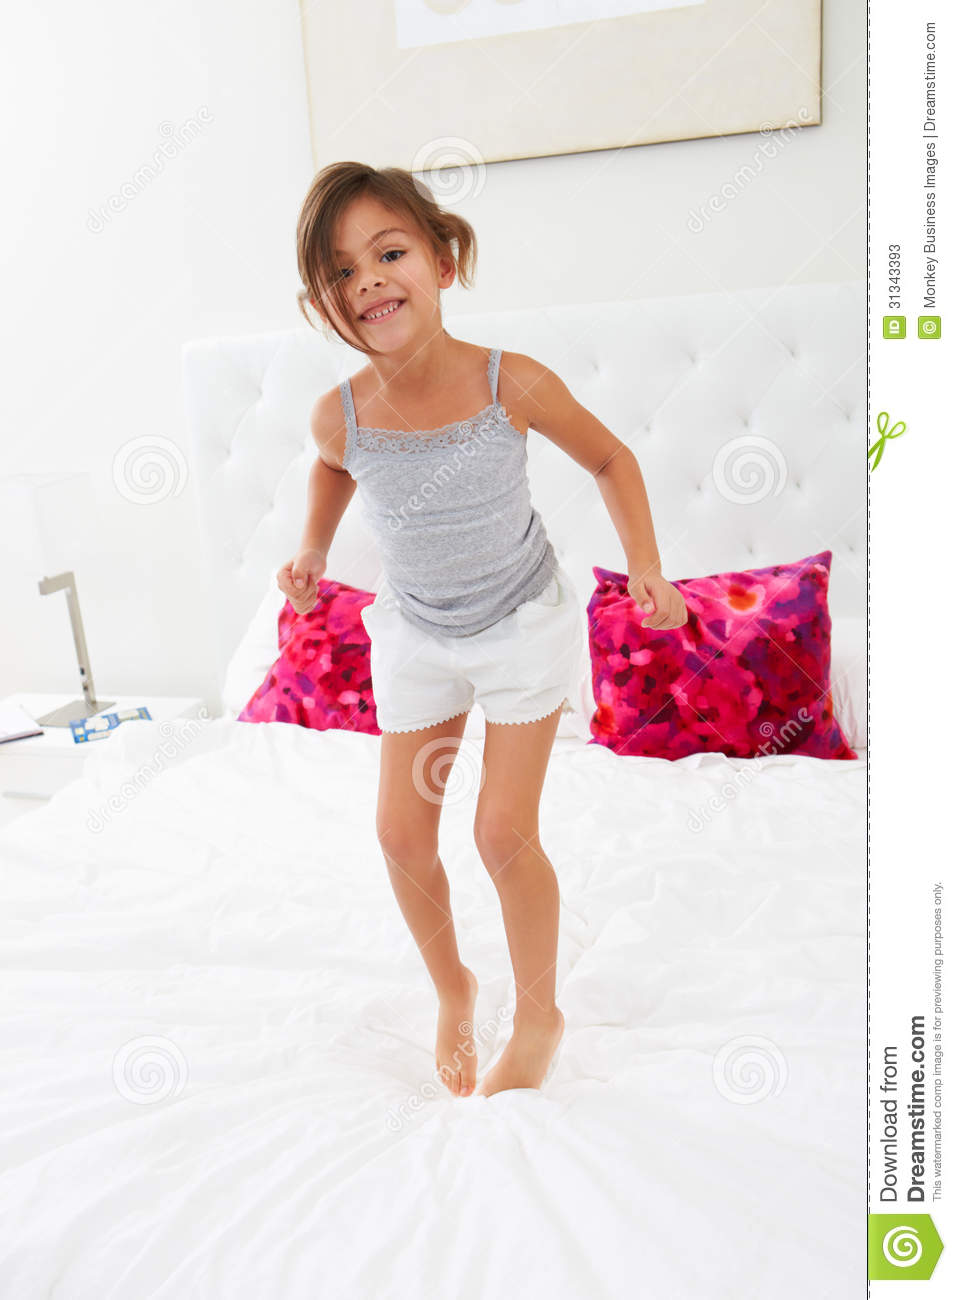 Girl Jumping On Bed Wearing Pajamas Stock Photos   Image  31343393